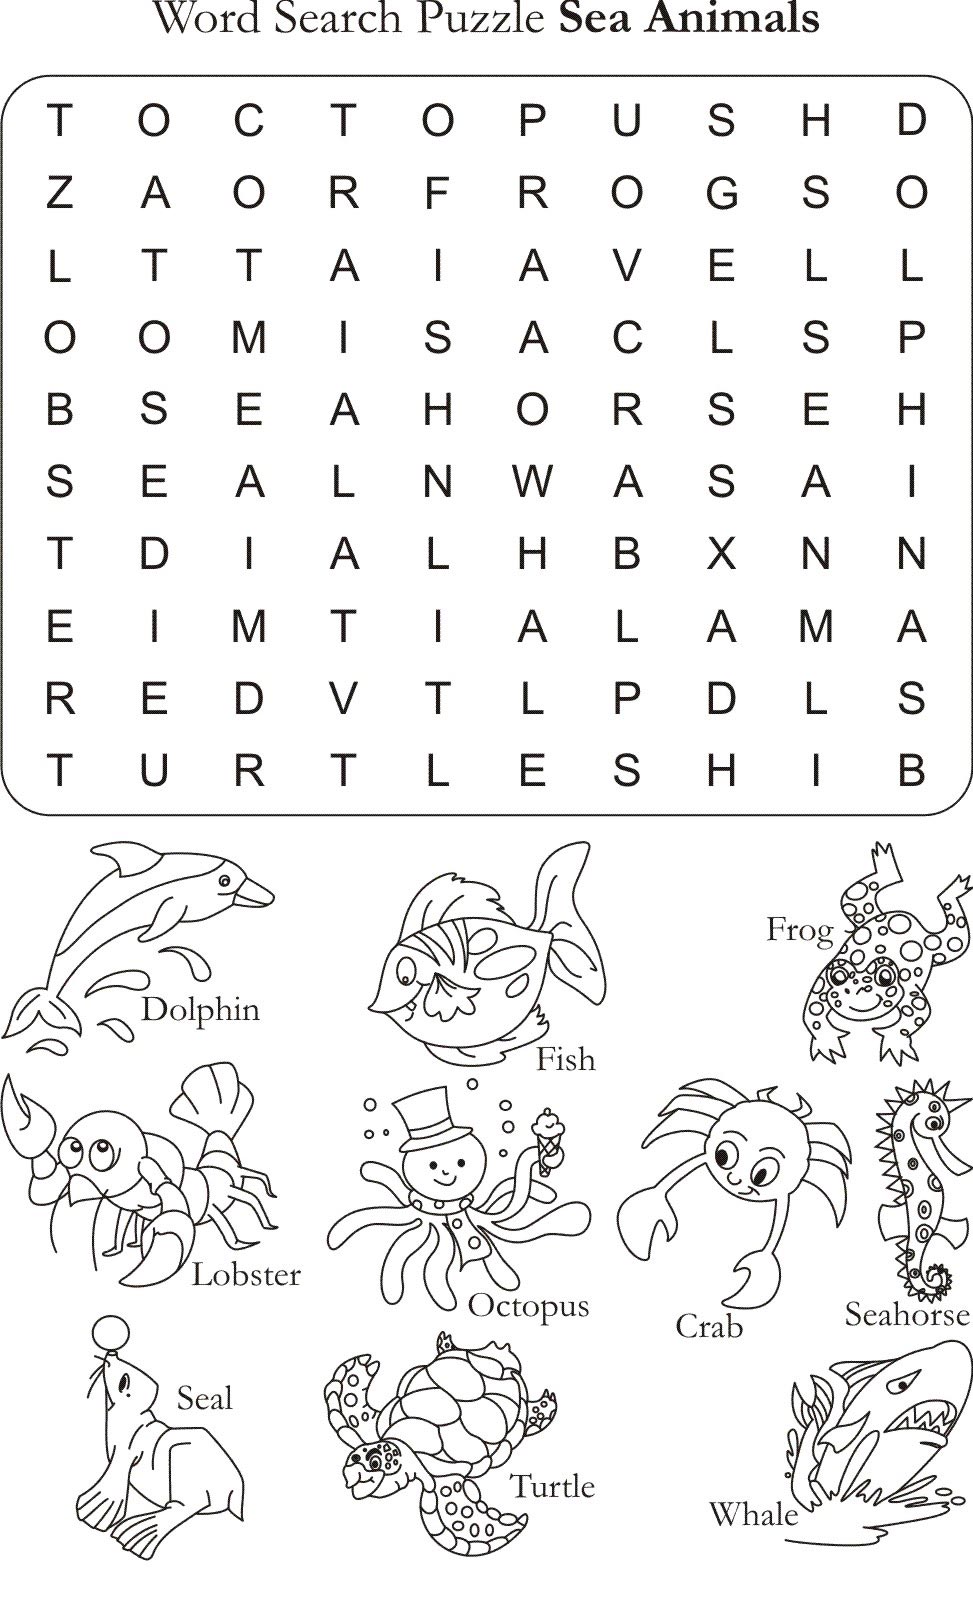 Word Search Puzzle Sea Animals